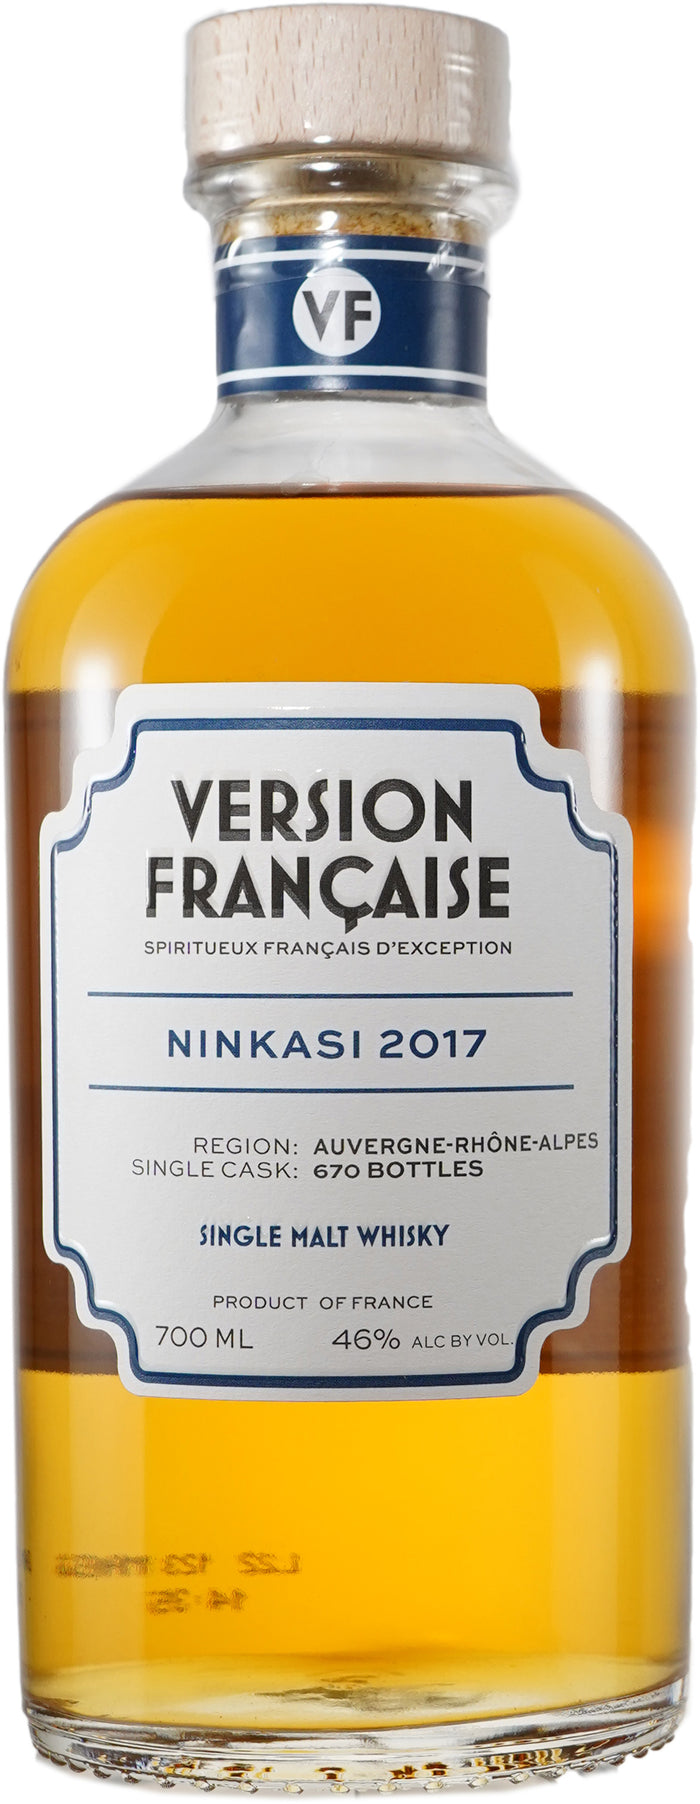 Version Francaise de Nikasi 4 Year Old French Single Malt 2017 Whisky | 700ML